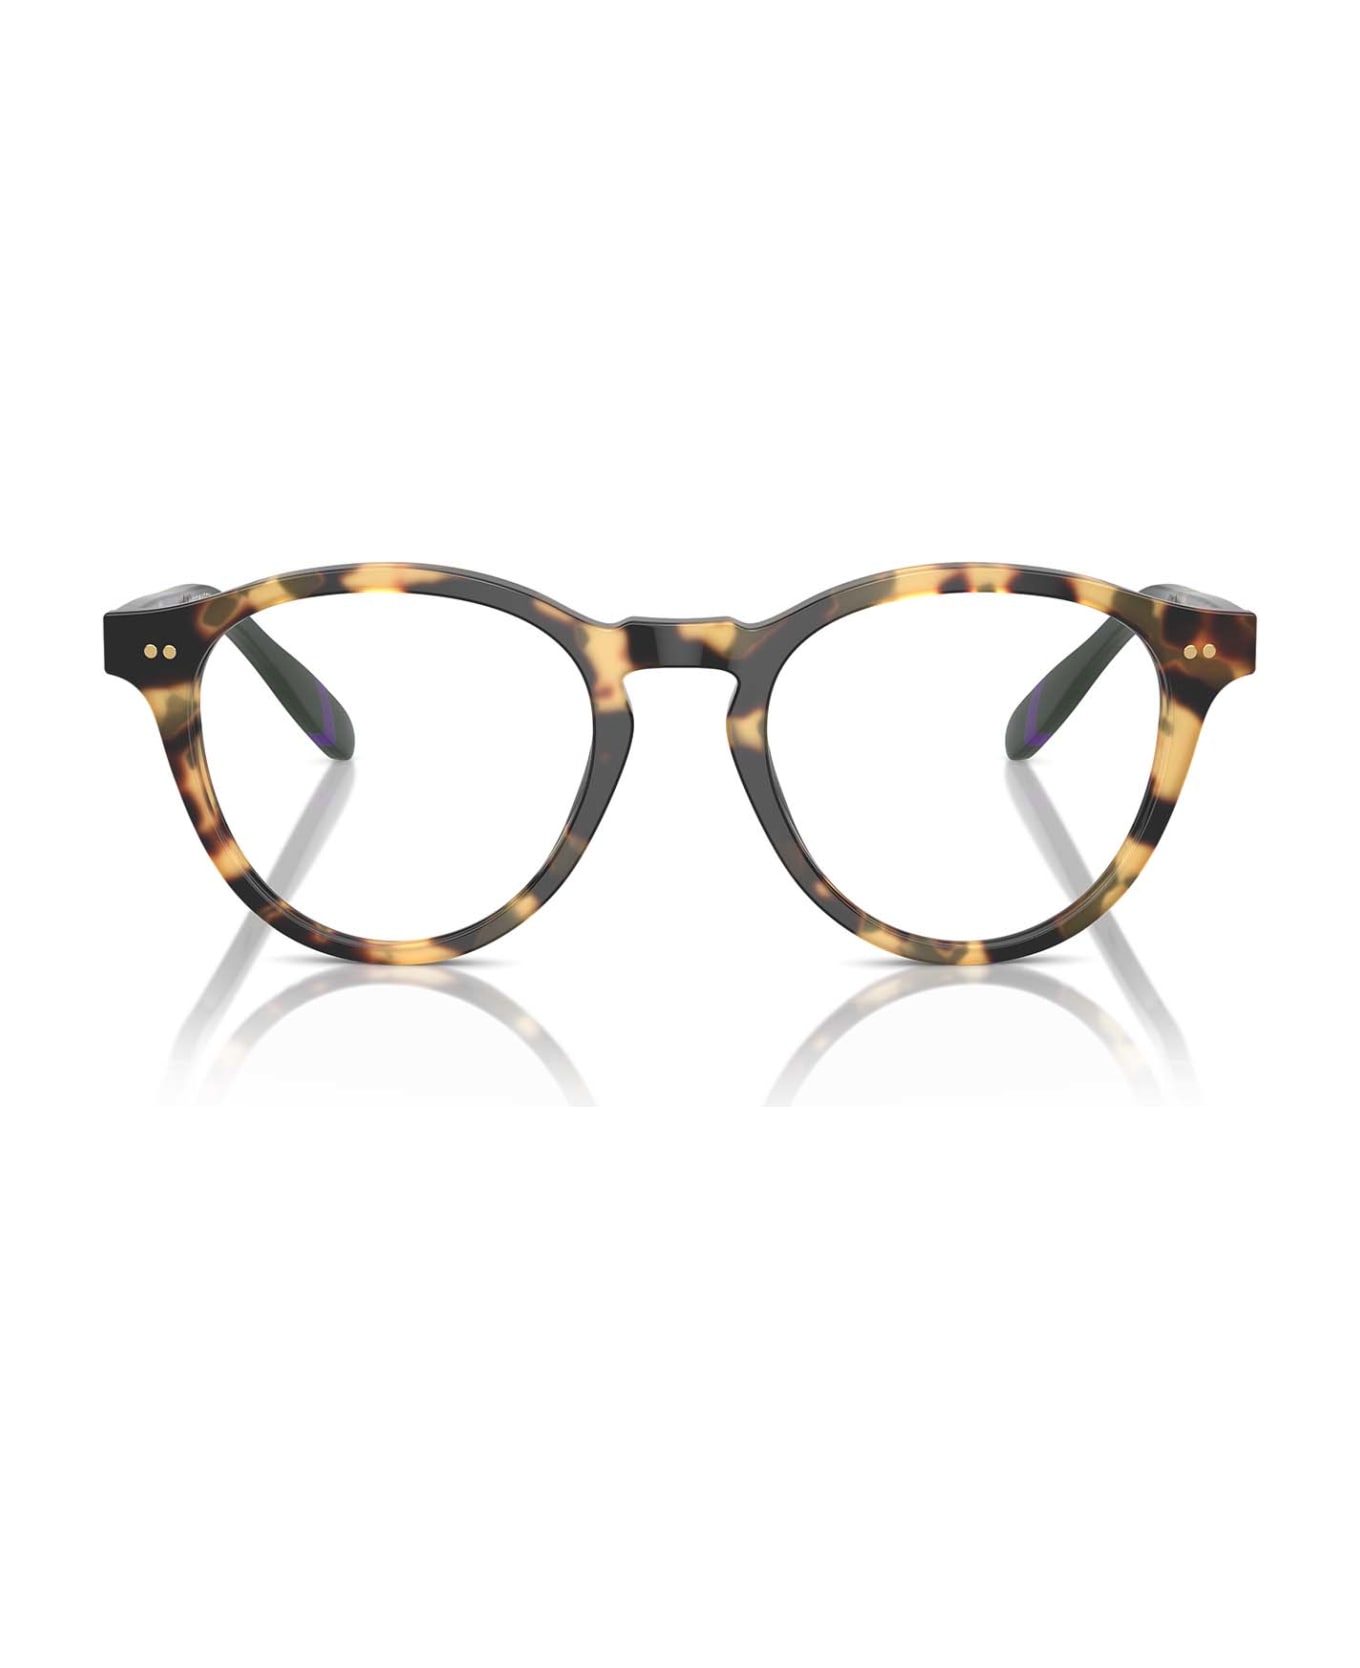 Polo Ralph Lauren Ph2268 Havana Glasses - Havana アイウェア